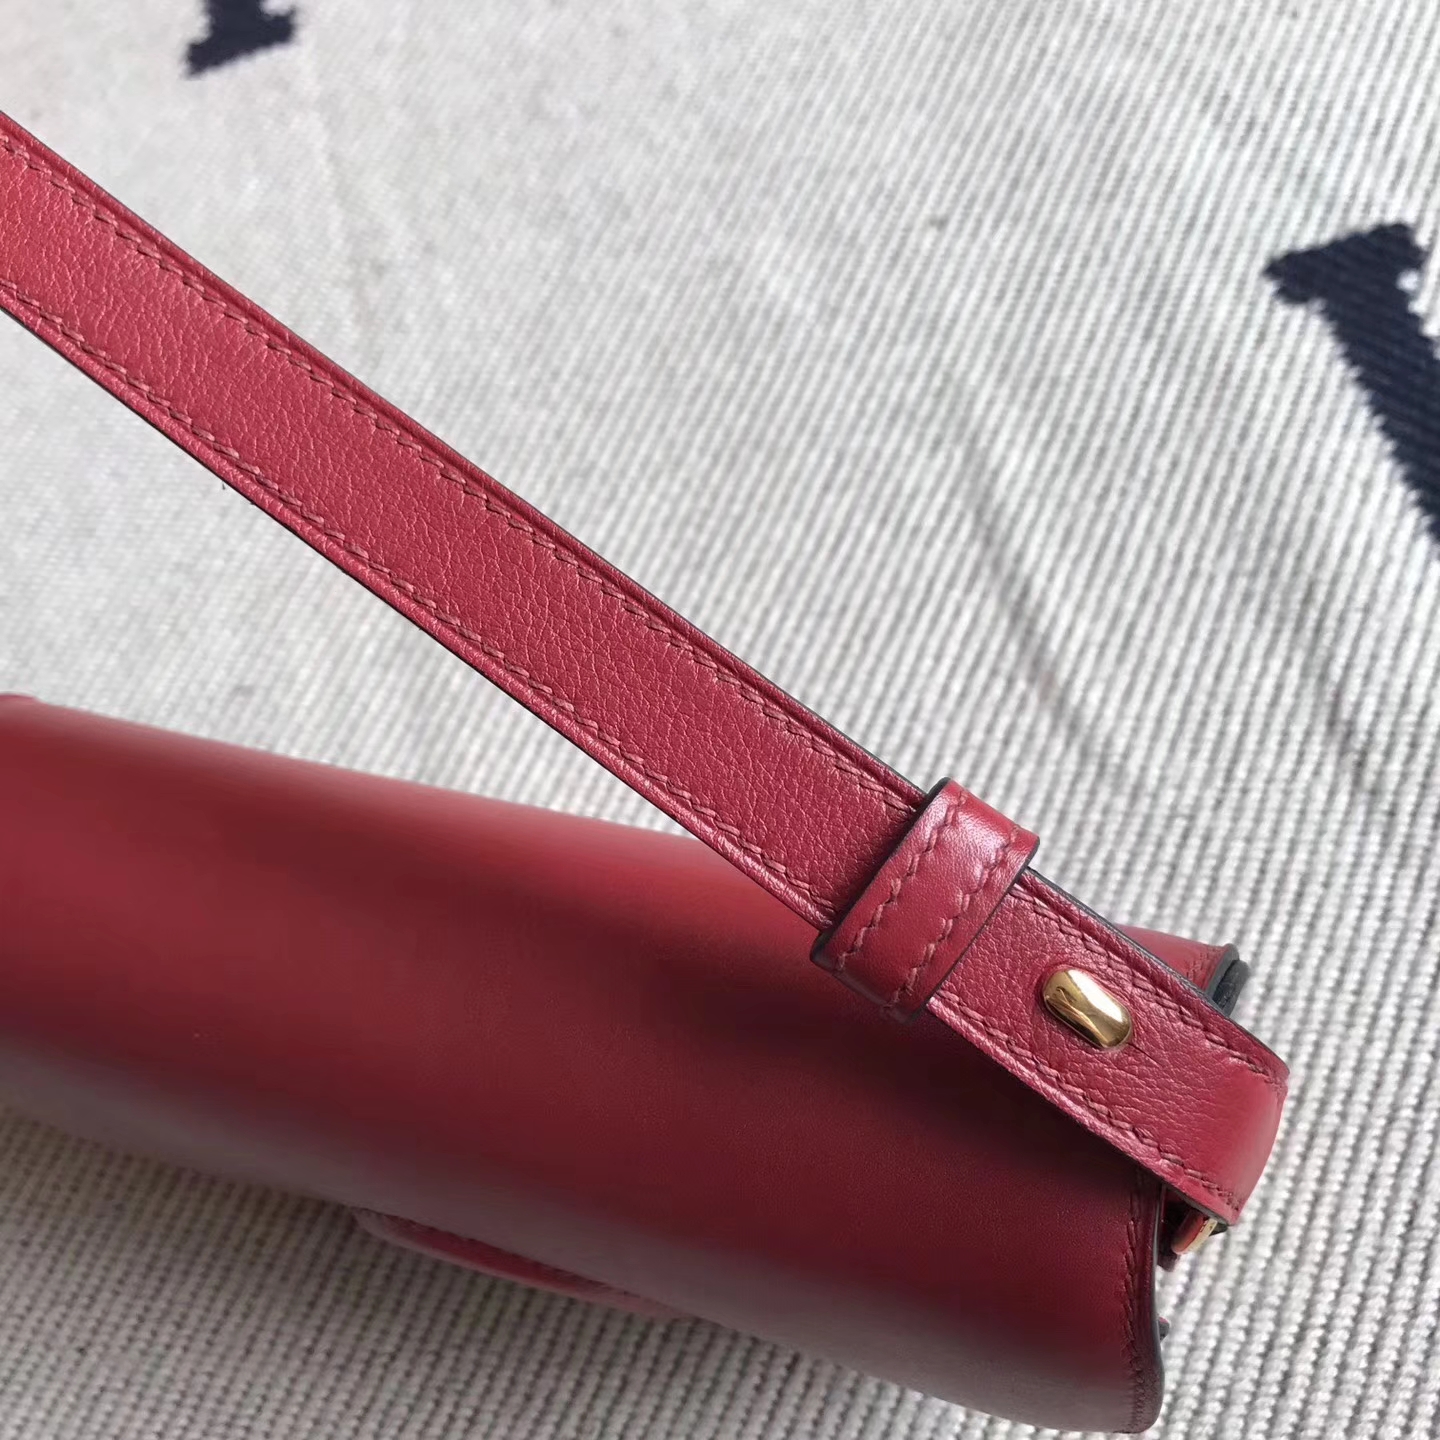 Discount Hermes Cherche Midi Bag in K1 Rouge Grenade Swift Leather